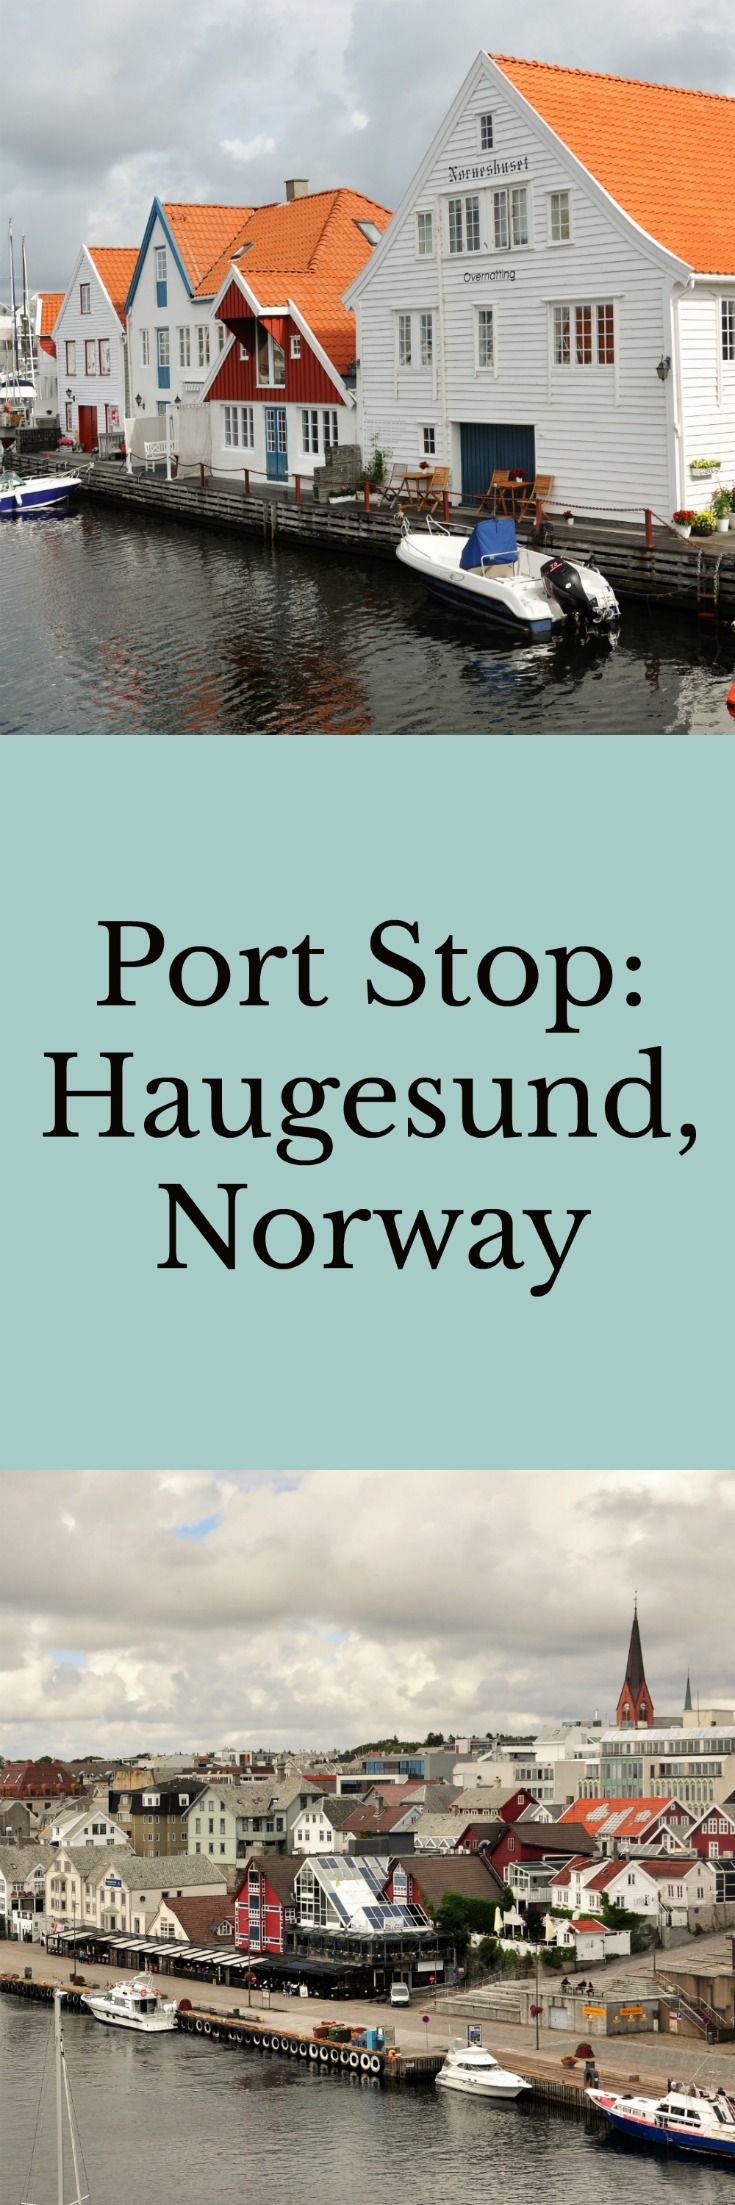 Port Stop: Haugesund, Norway